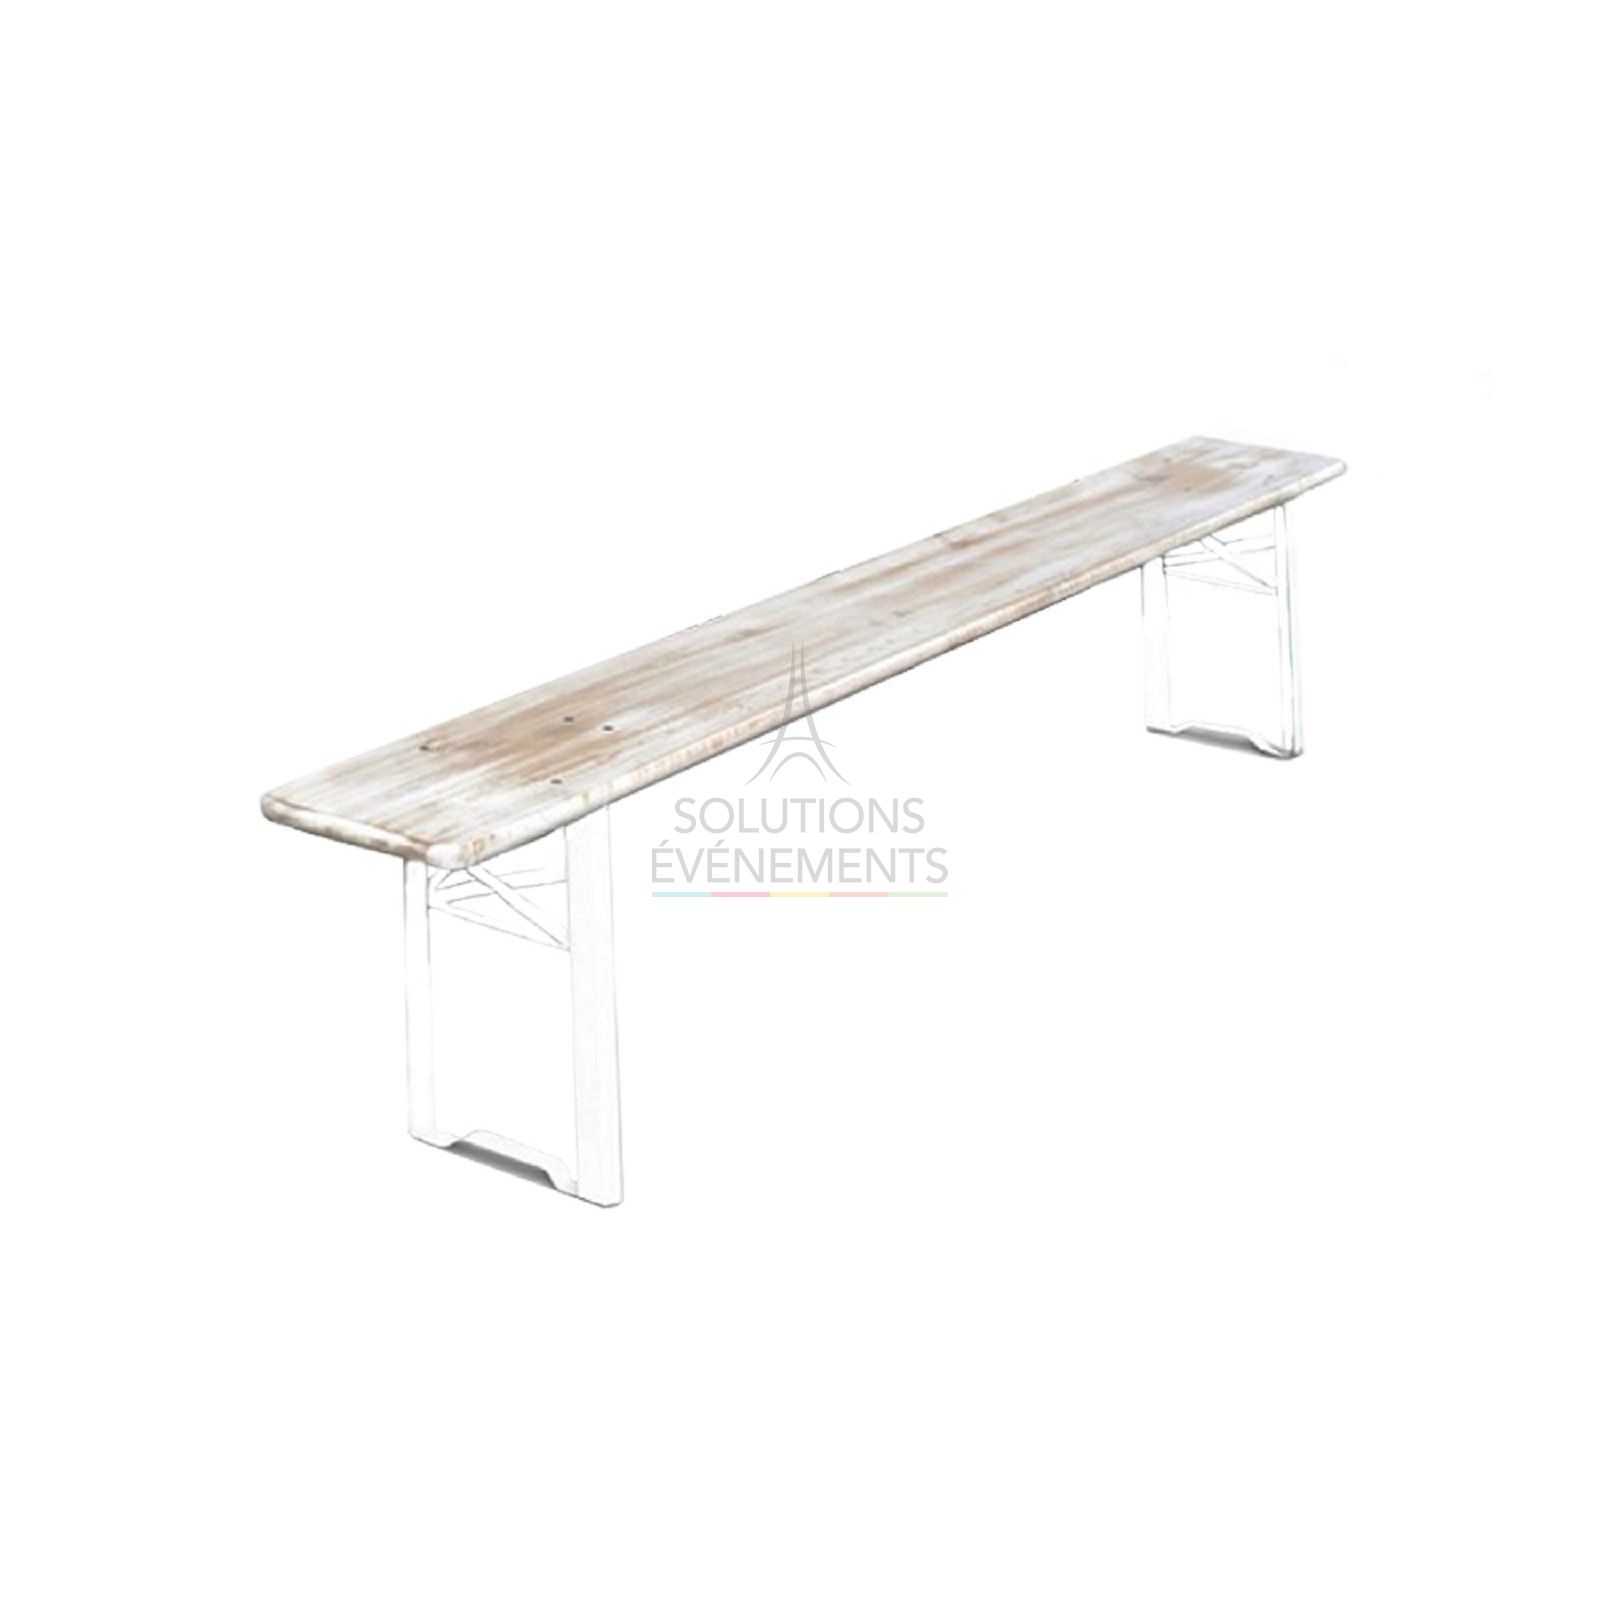 Rental of white wooden bench for brasserie table